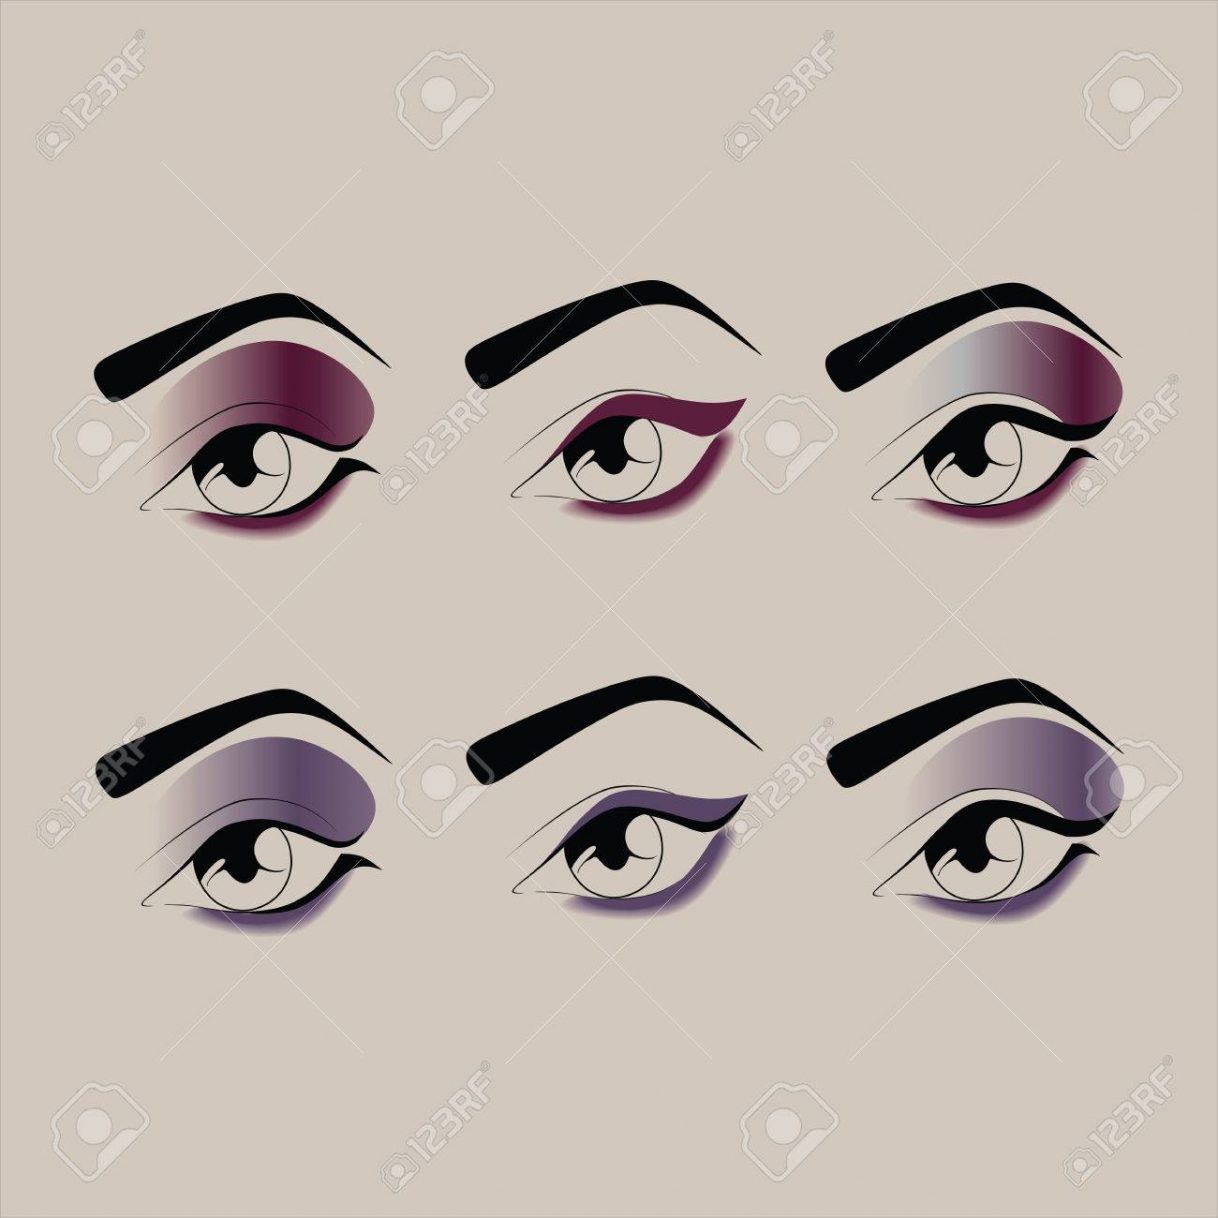 Ball Eye Makeup Eye Makeup Cosmetics Shadow Mascara Eyeliner Royalty Free